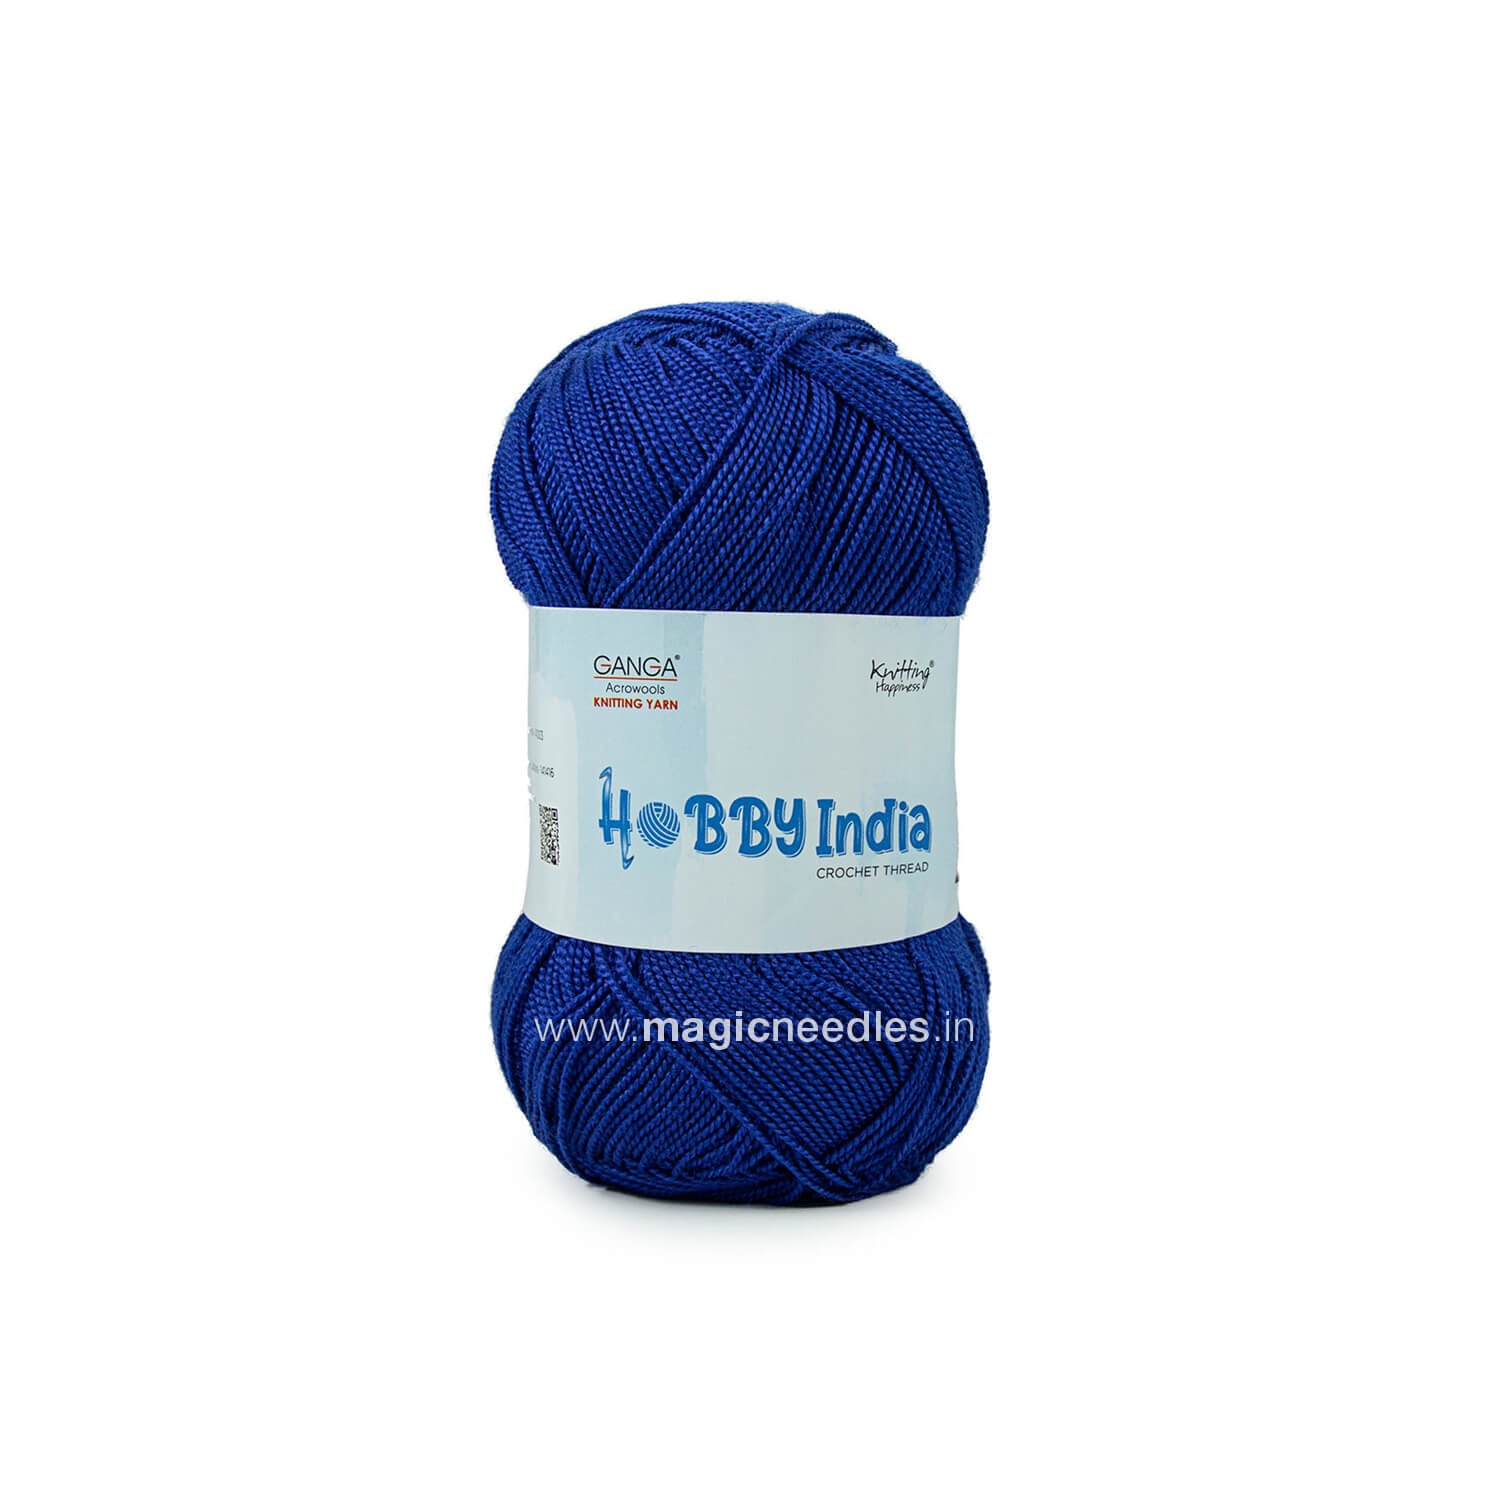 Ganga Hobby India Crochet Thread - Blue 73